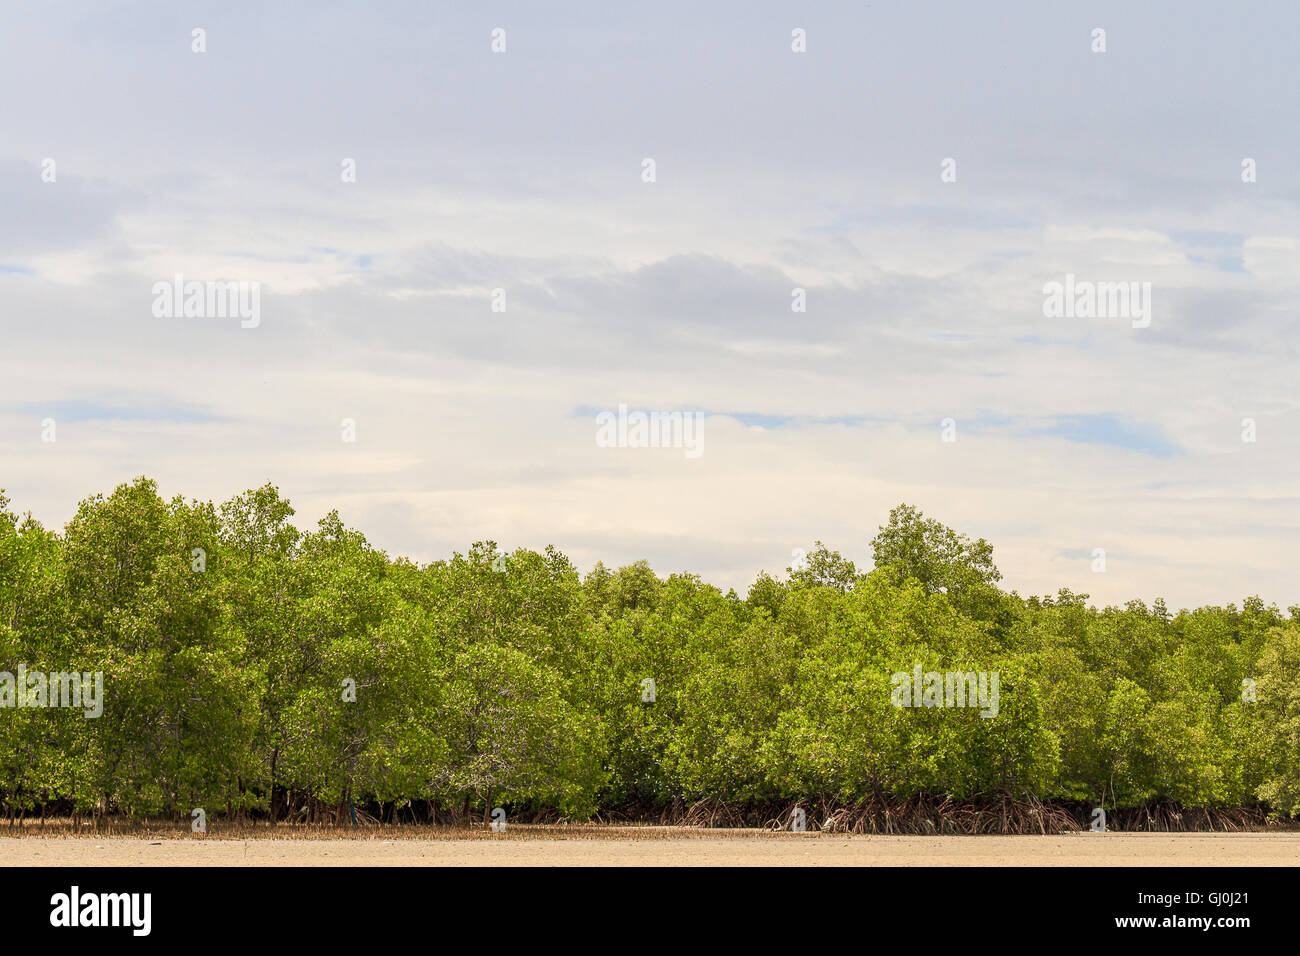 Mangroves Tree Or Shrub Stock Photo